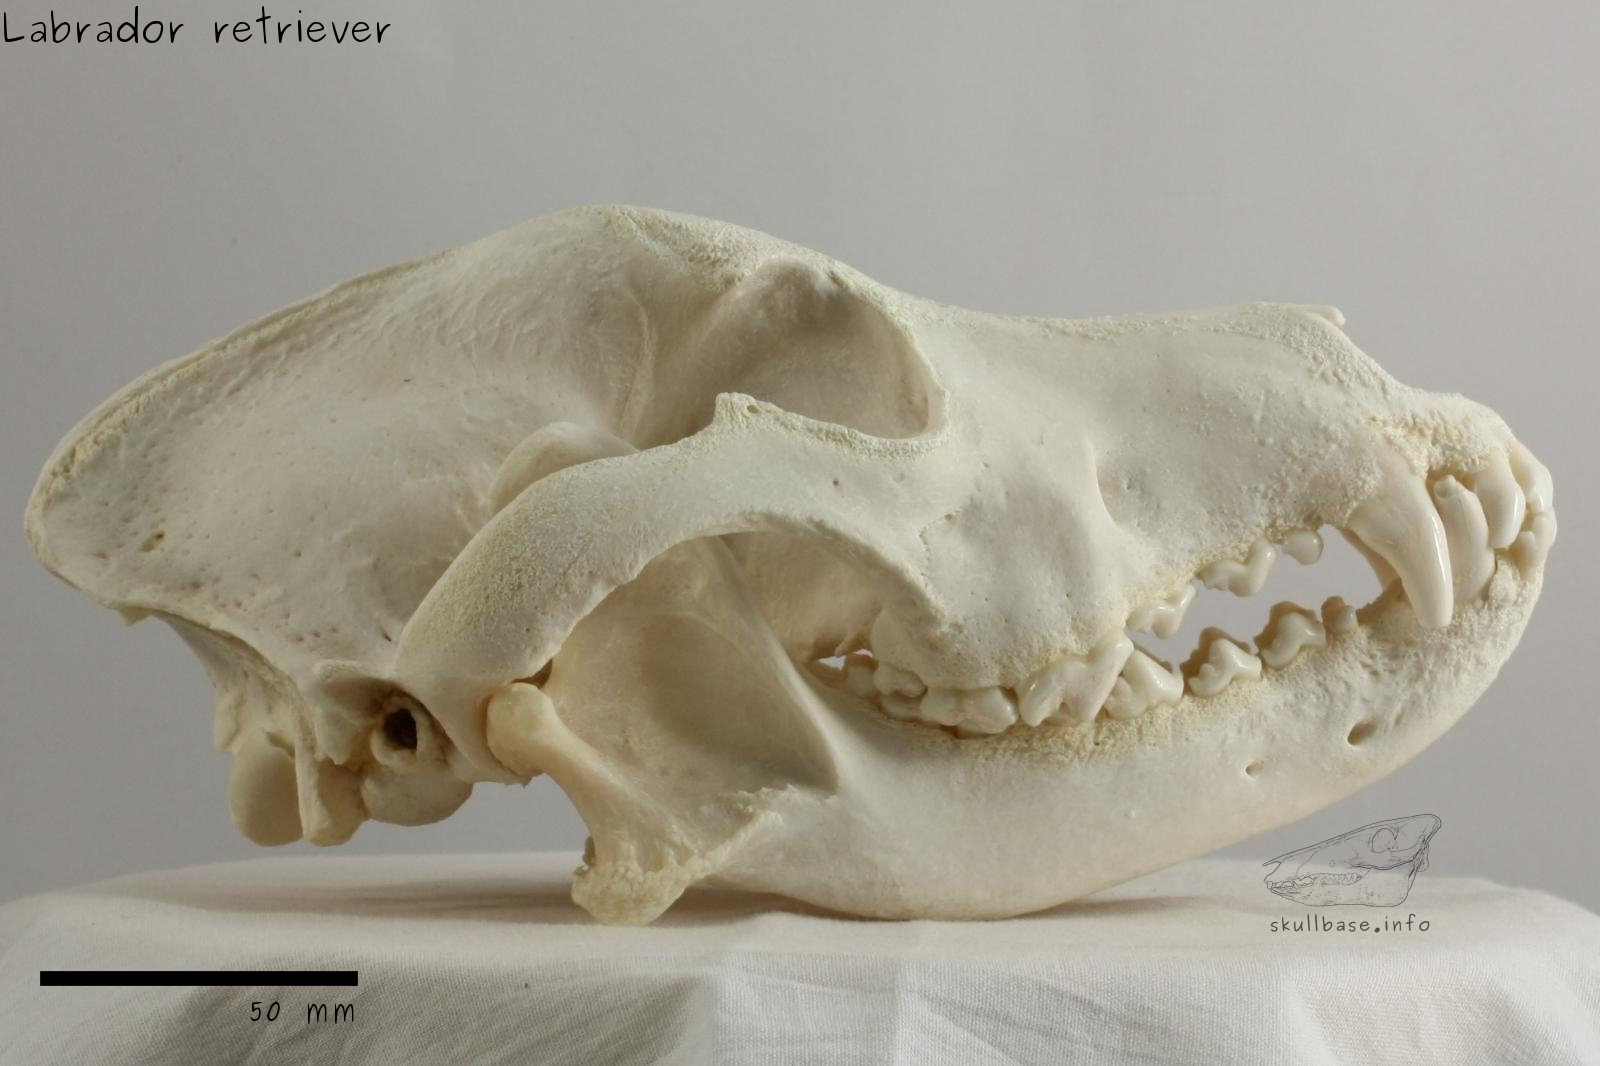 Labrador retriever (Canis lupus familiaris) skull lateral view